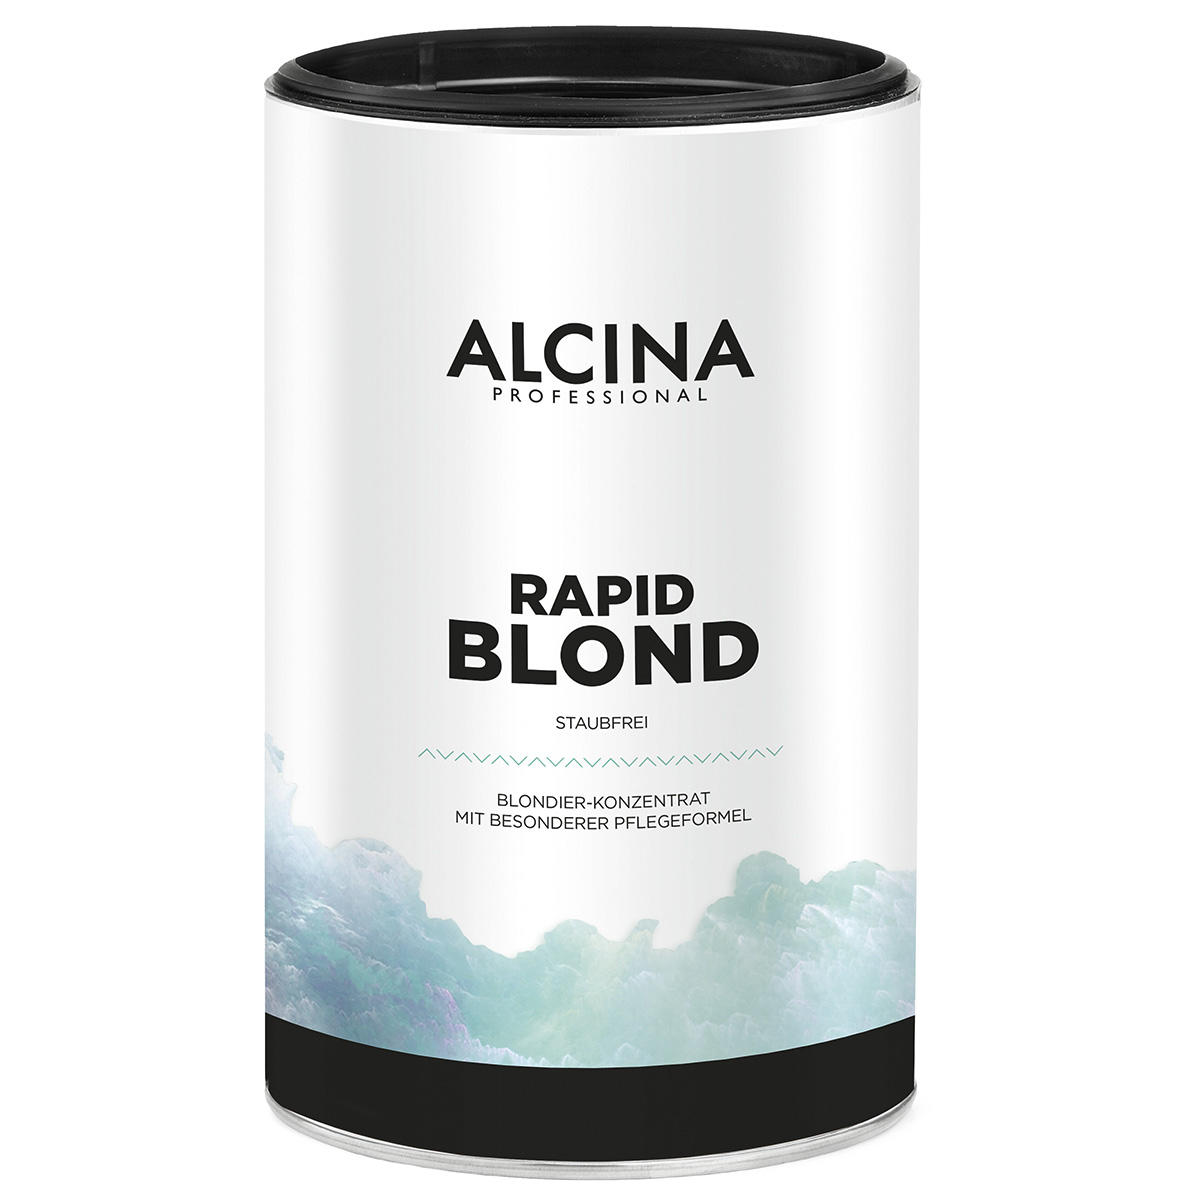 Alcina Rapid Blond Dust Free 500 g - 1